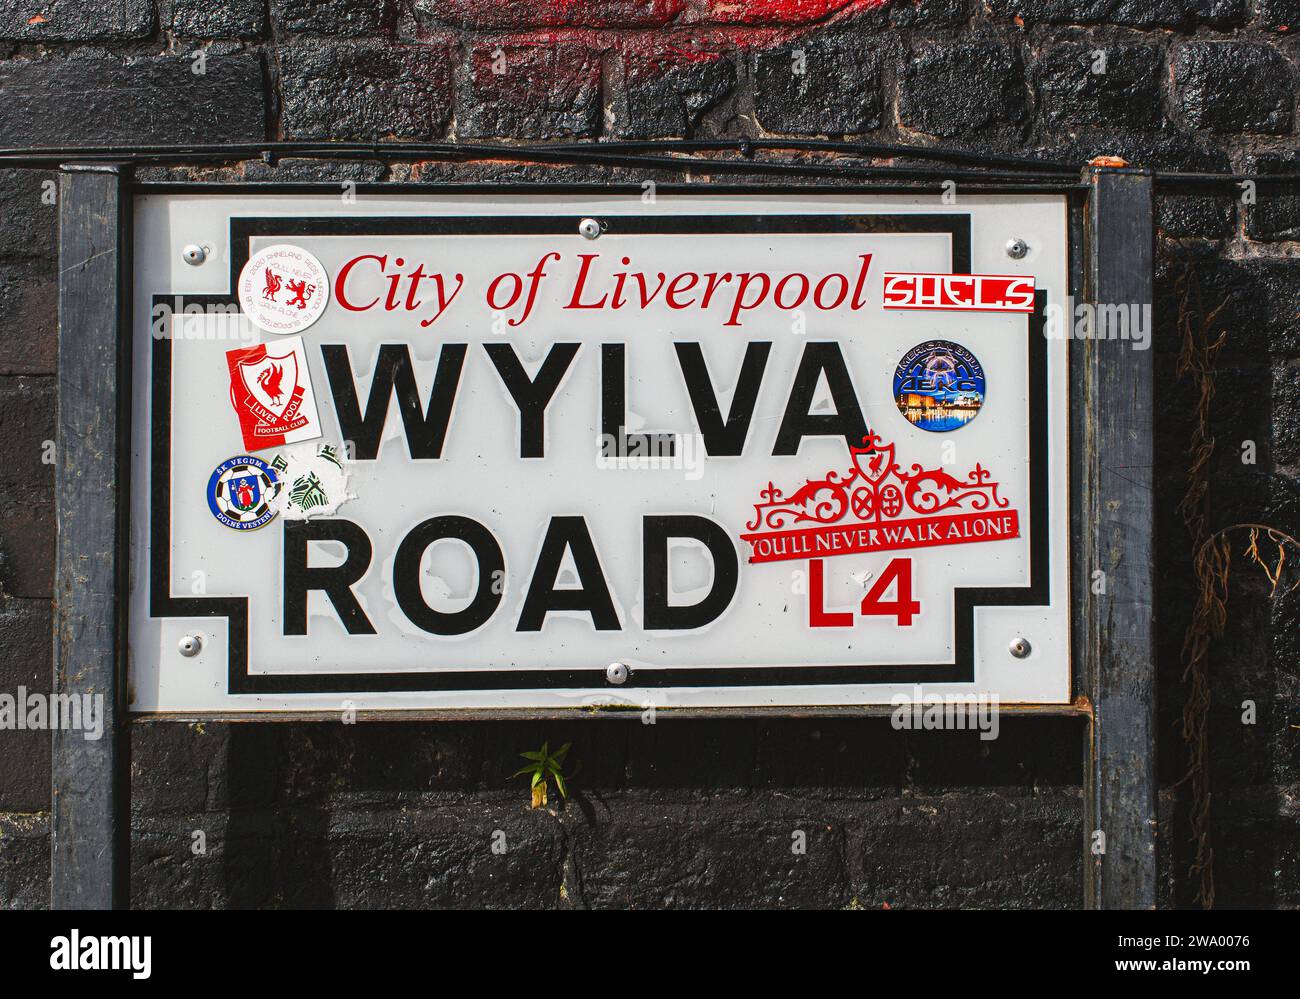 Straßenschild City of Liverpool, Wylva Road, Anfield, L4 Stockfoto